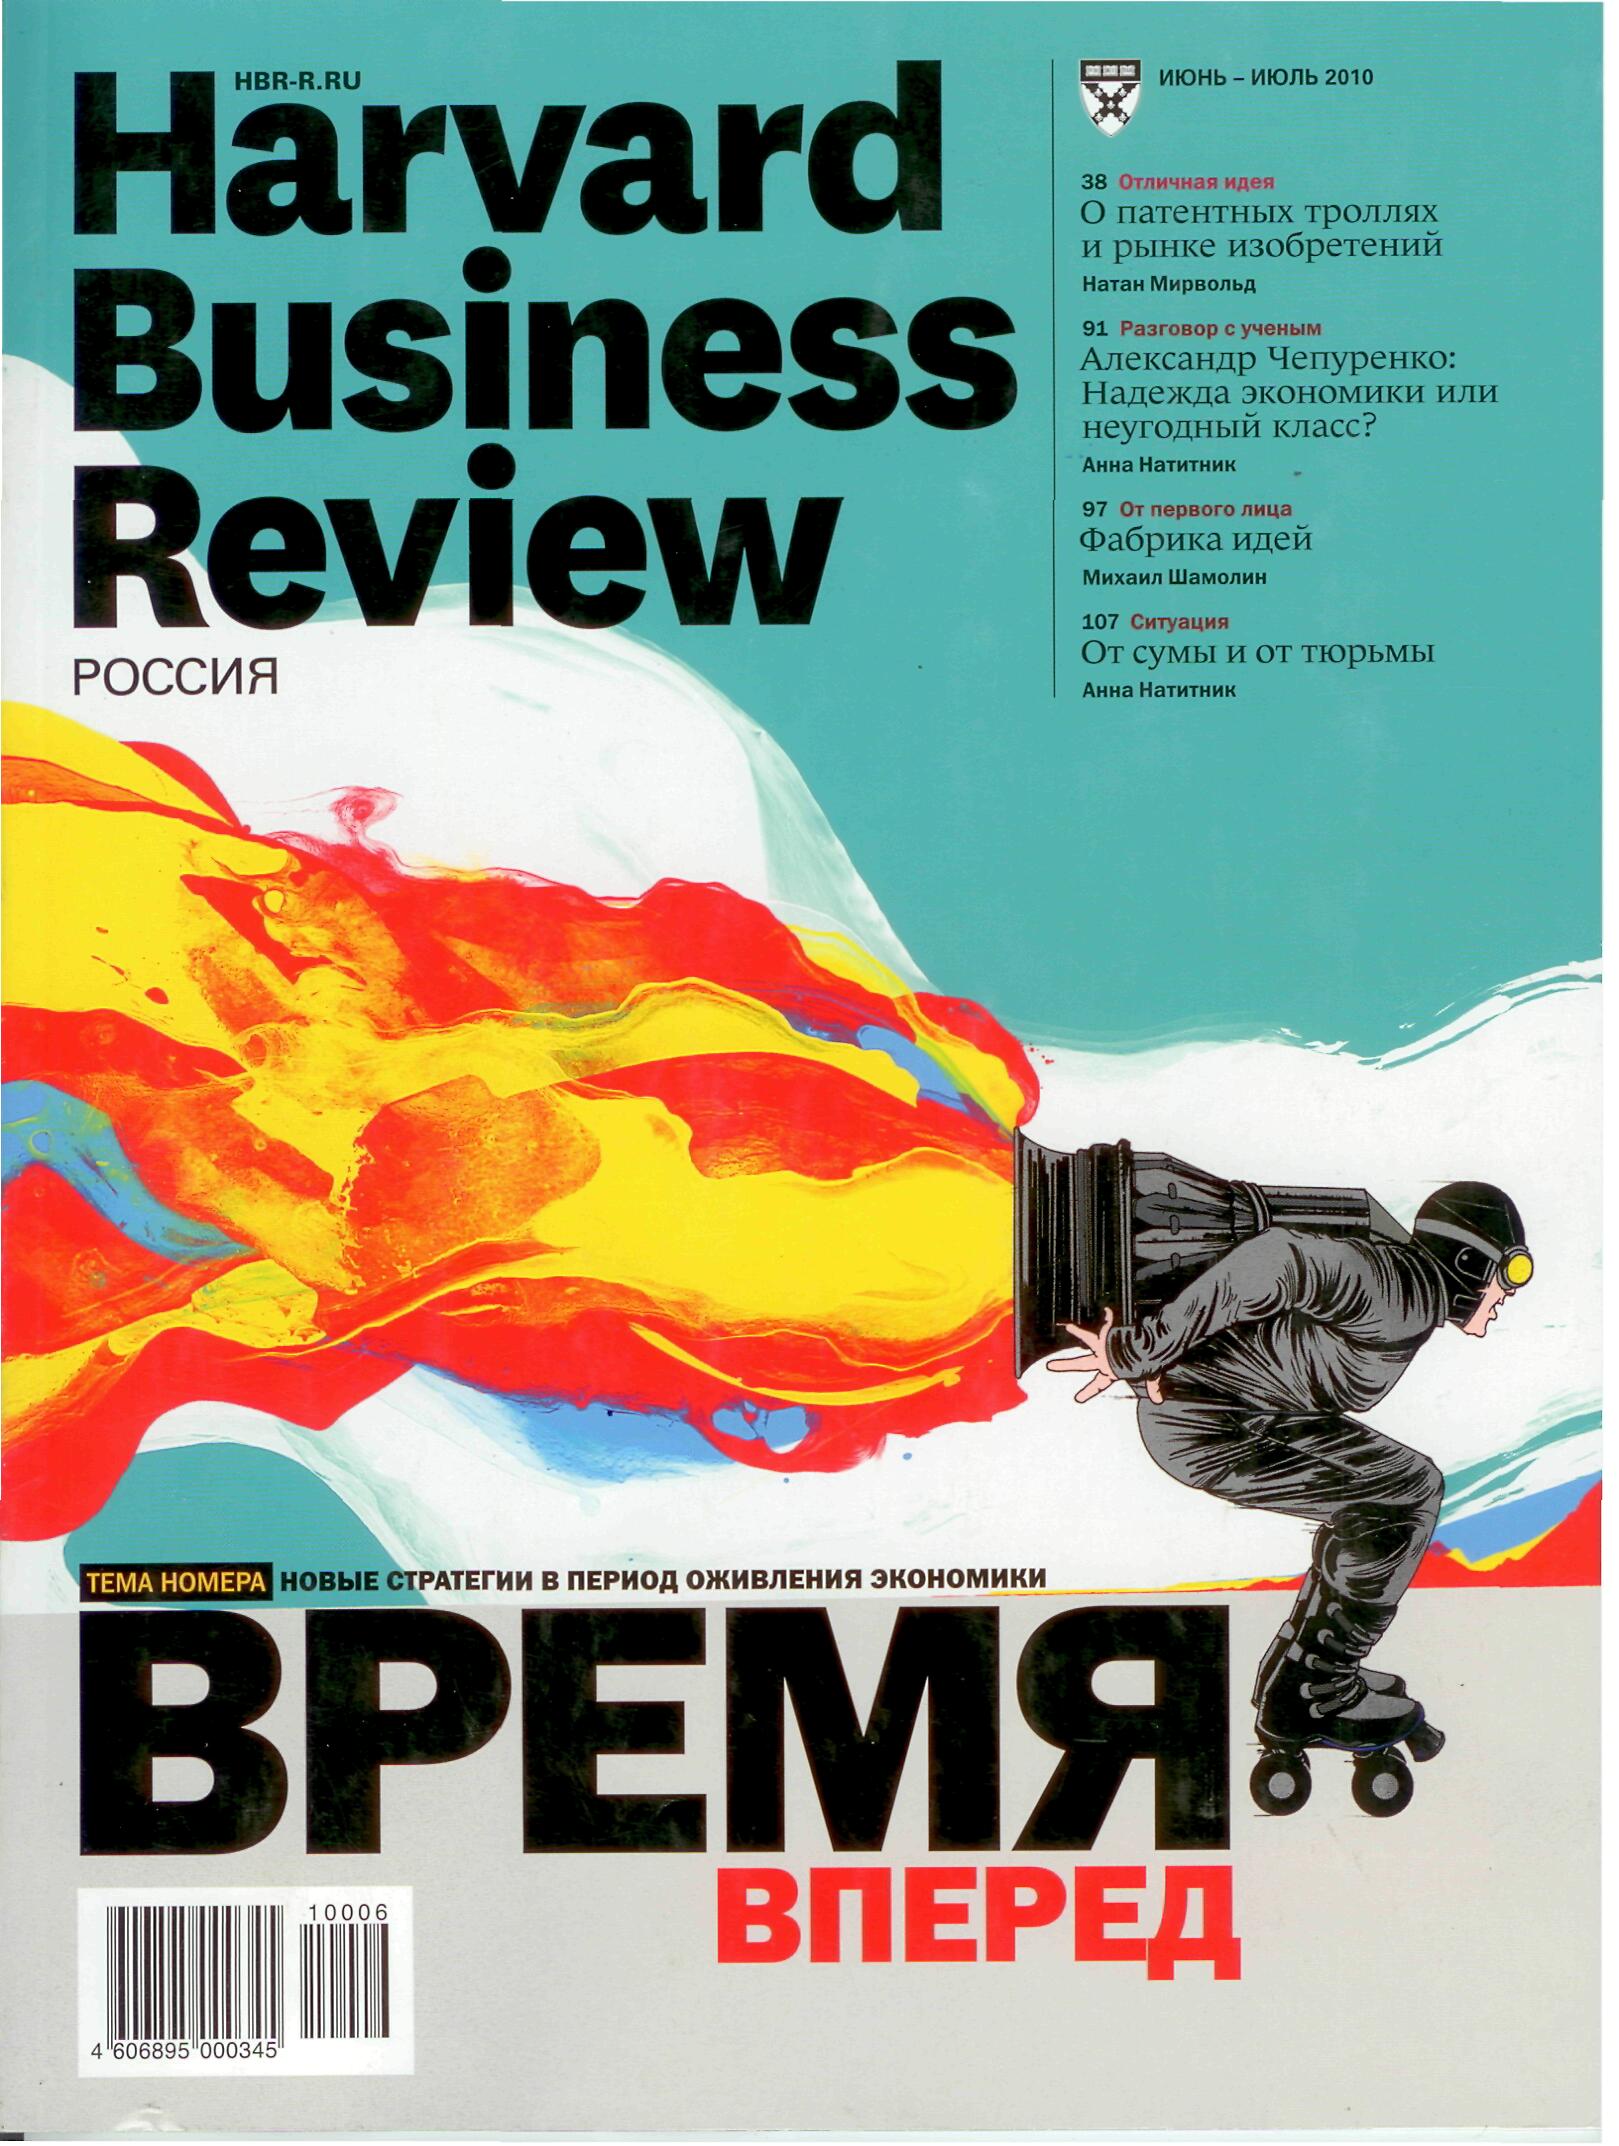 Harvard Business Review Россия. Электронная версия архива журнала. Электронный журнал Большие идеи. На портале  Big-I.RU